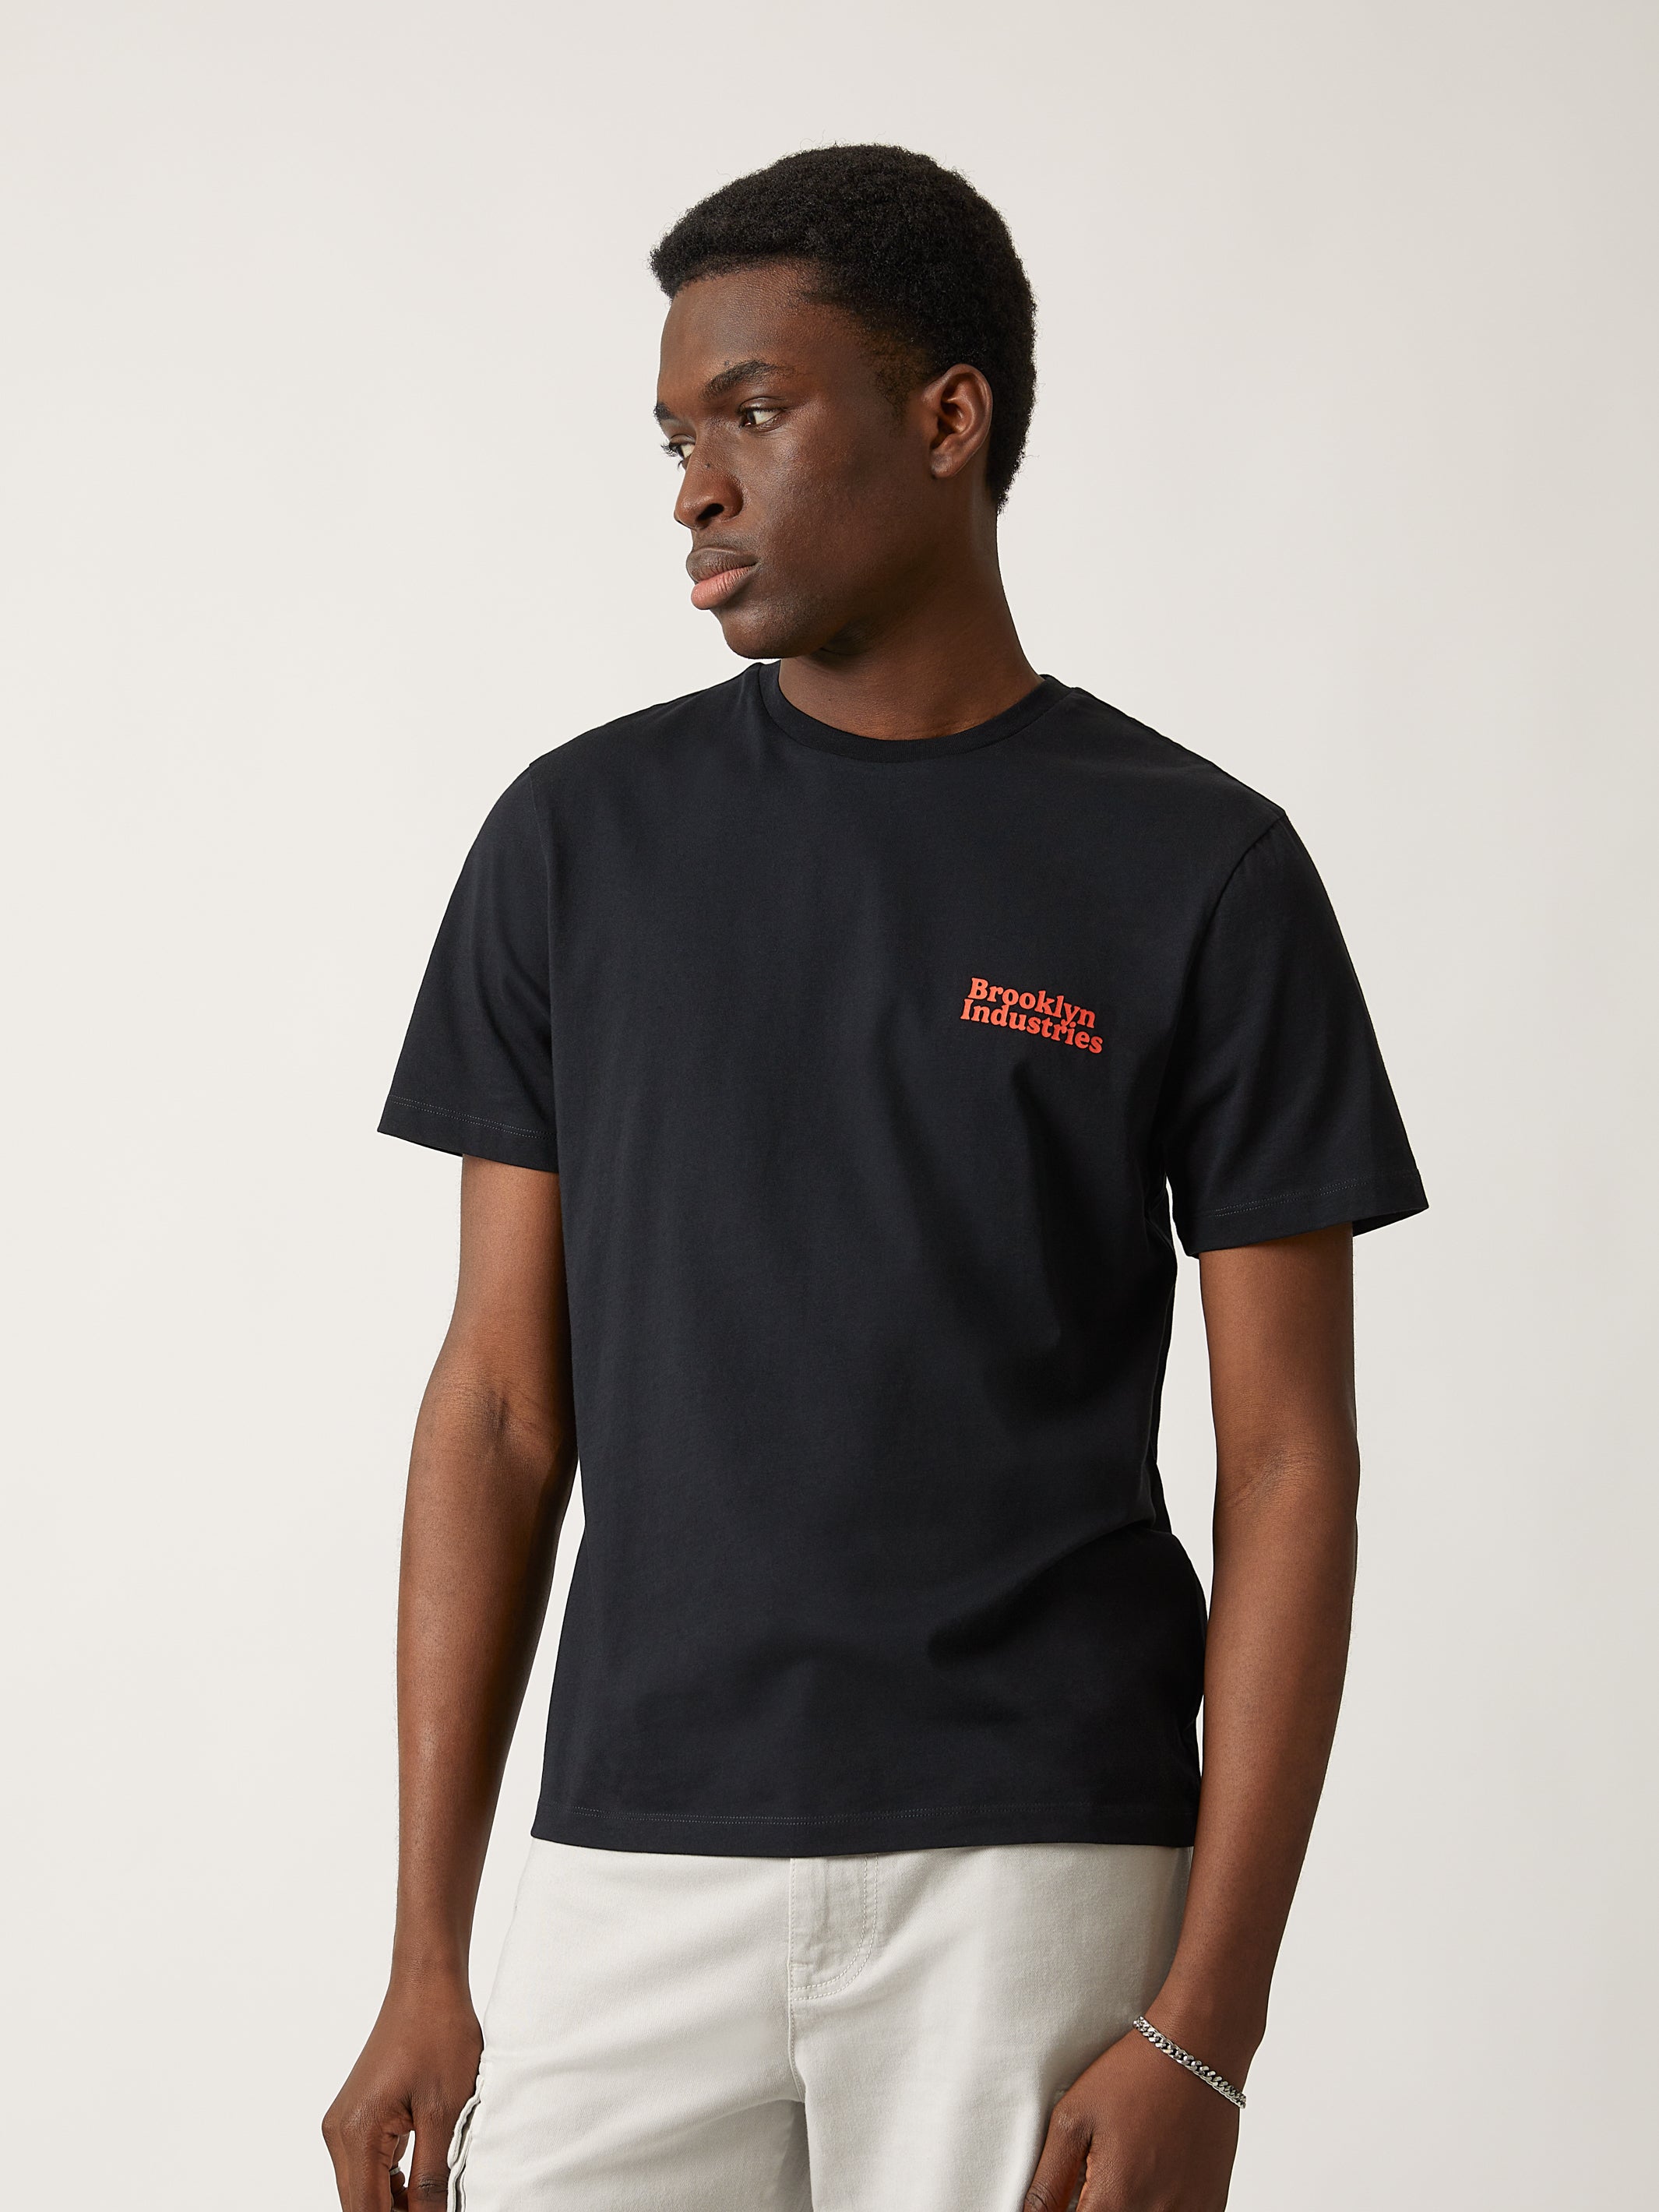 Men's NYC T-shirt in Black - BROOKLYN INDUSTRIES